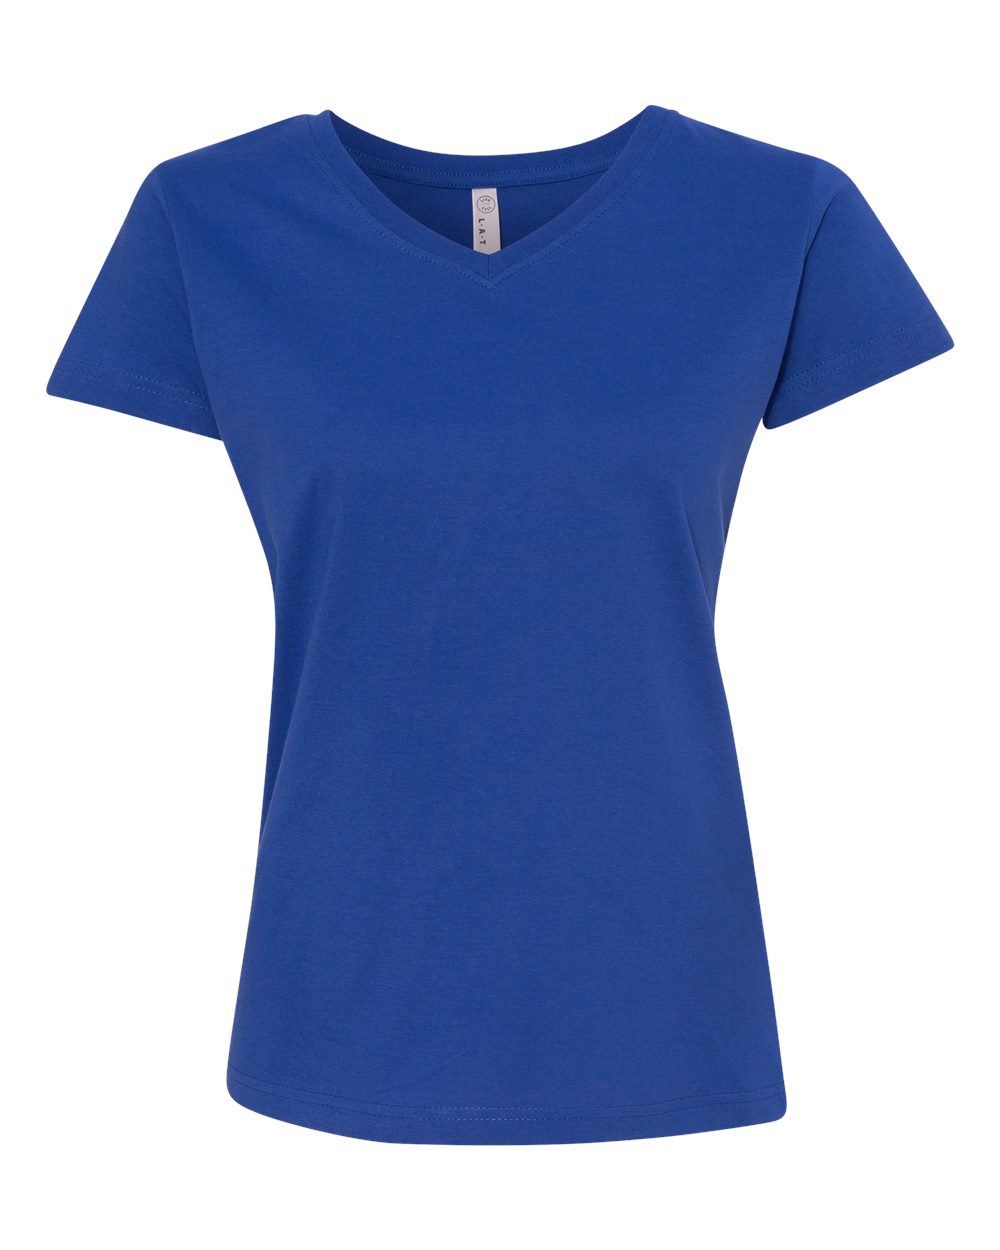 LAT 3507 - Ladies' V-Neck Fine Jersey T-Shirt $5.57 - T-Shirts